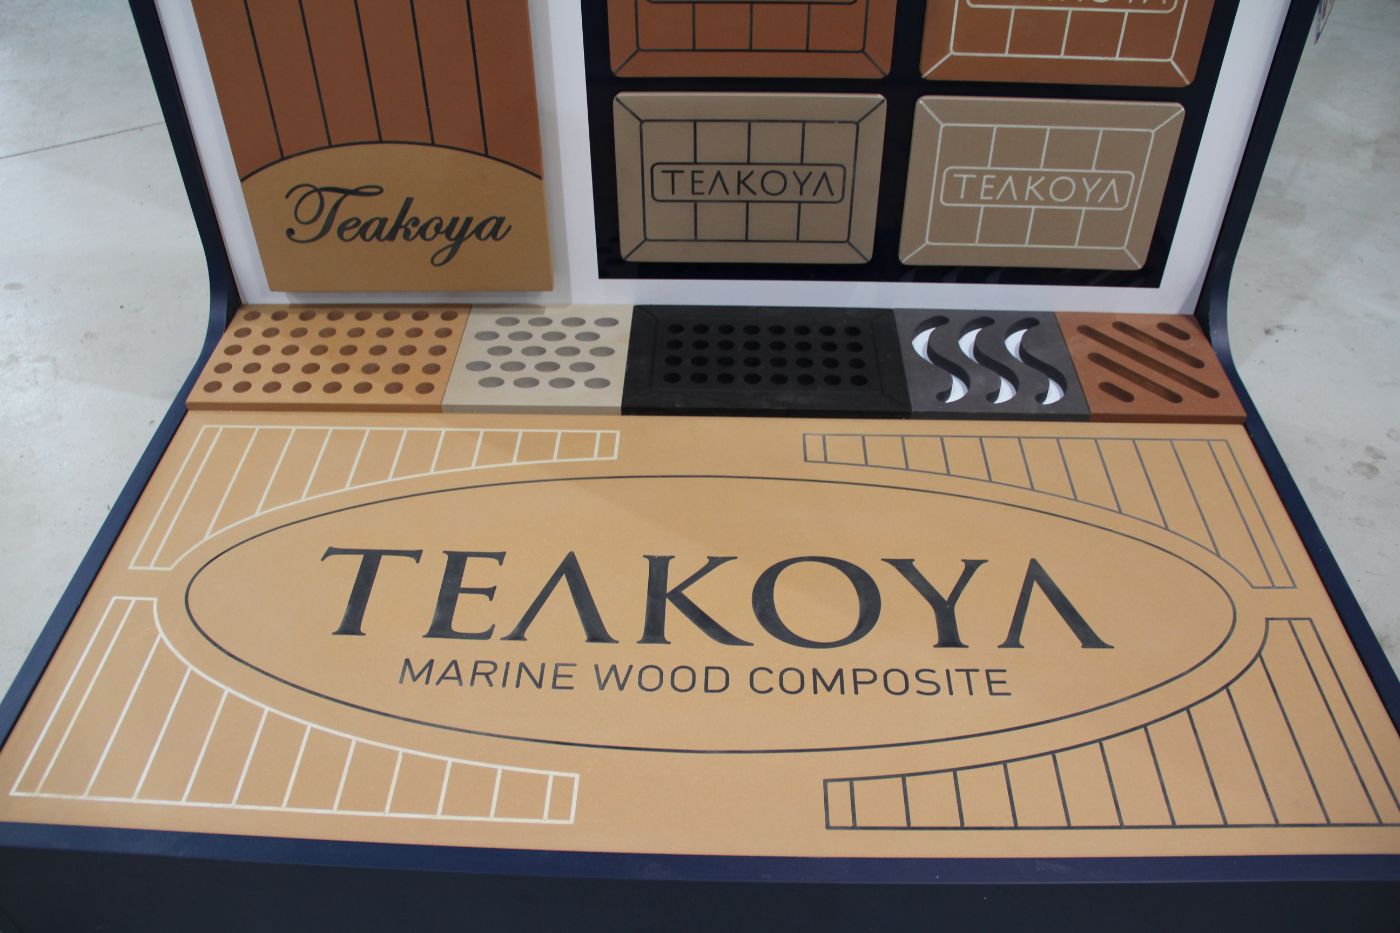 Teakoya Marine Wood Composite, Demedts Marine